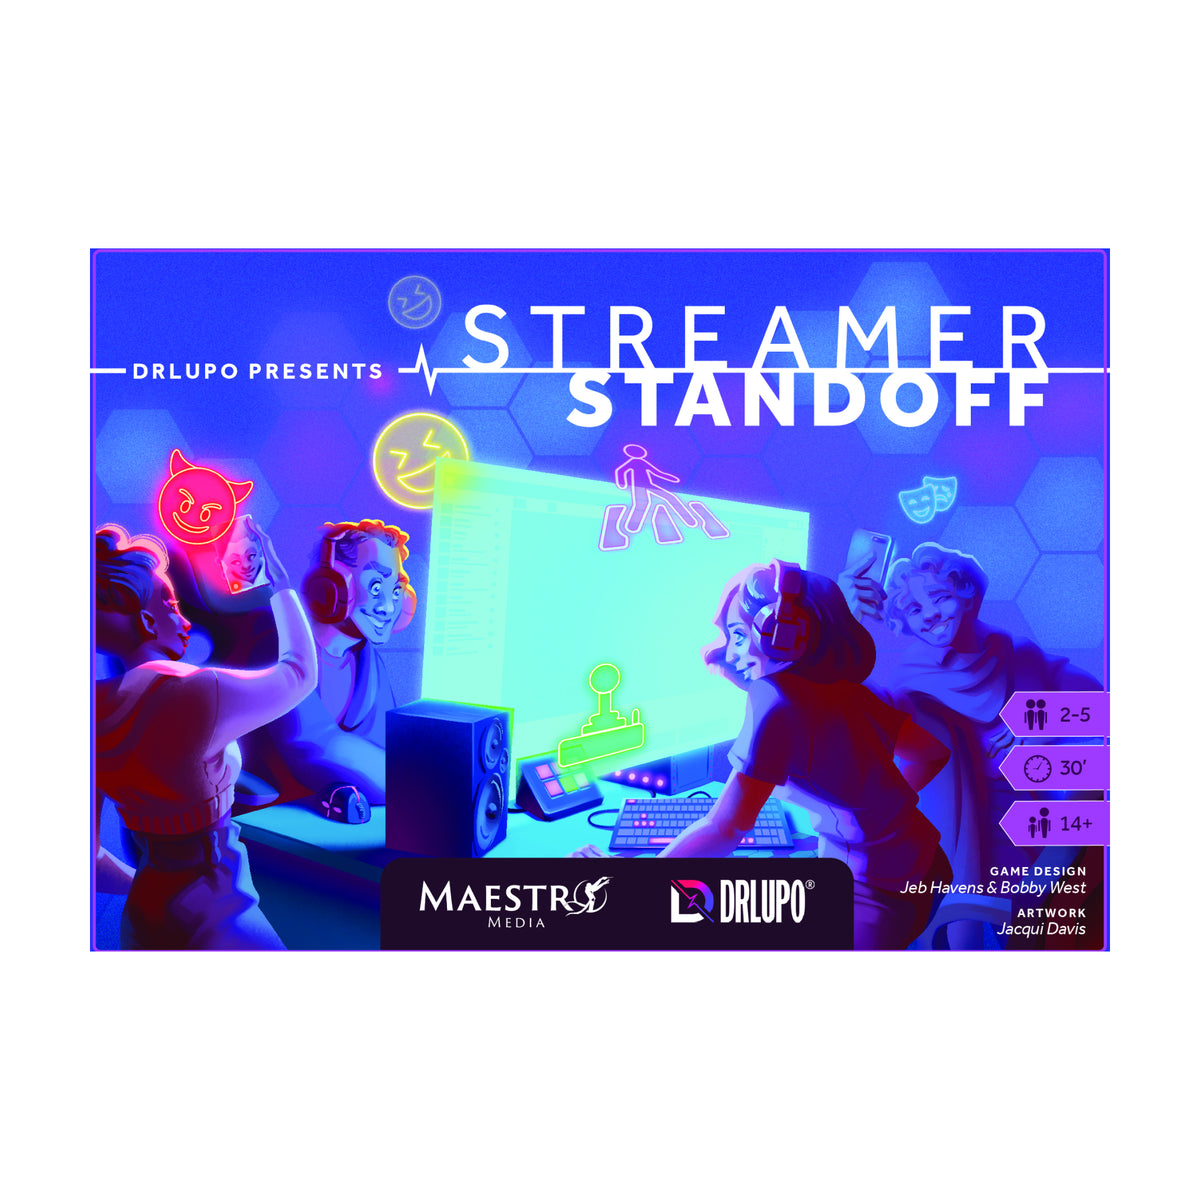 DrLupo Presents: Streamer Standoff